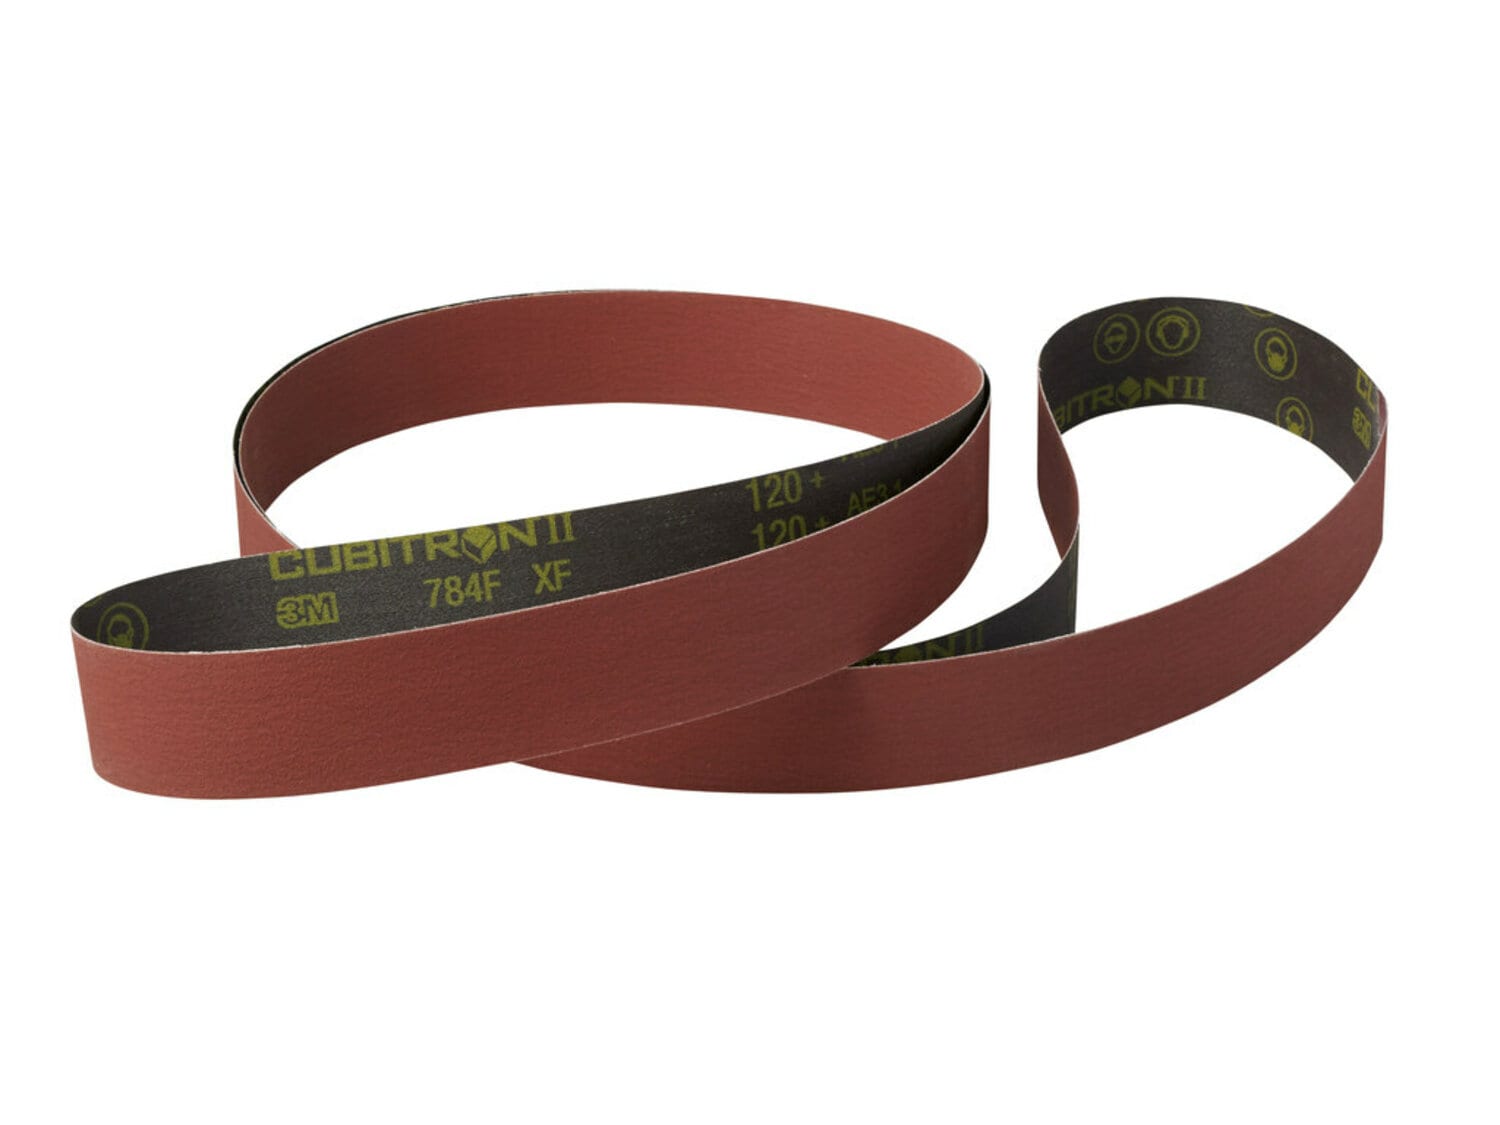 7100217475 - 3M Cubitron ll Cloth Belt 784F, 60+ YF-weight, 9 in x 48 in, Film-lok, Single-flex